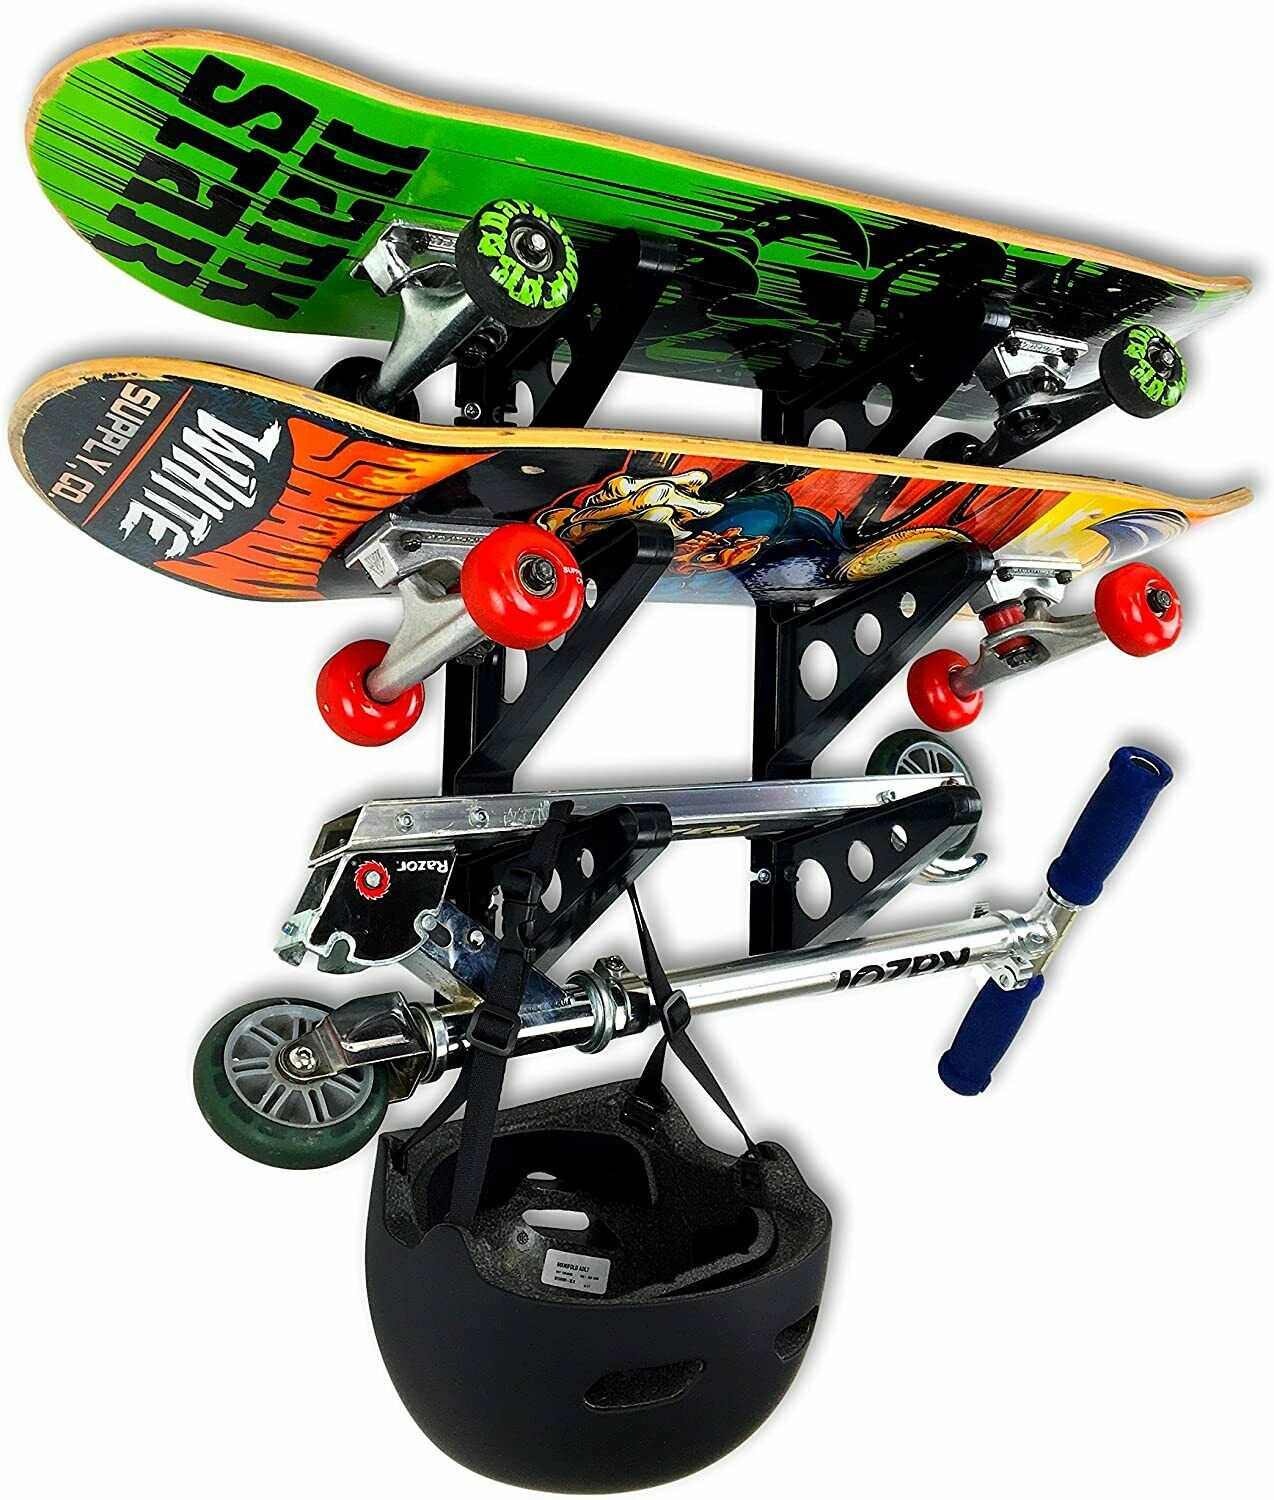 Storeyourboard Skateboard Rack - 3 Boards, Garage Wall Mounted Board Display